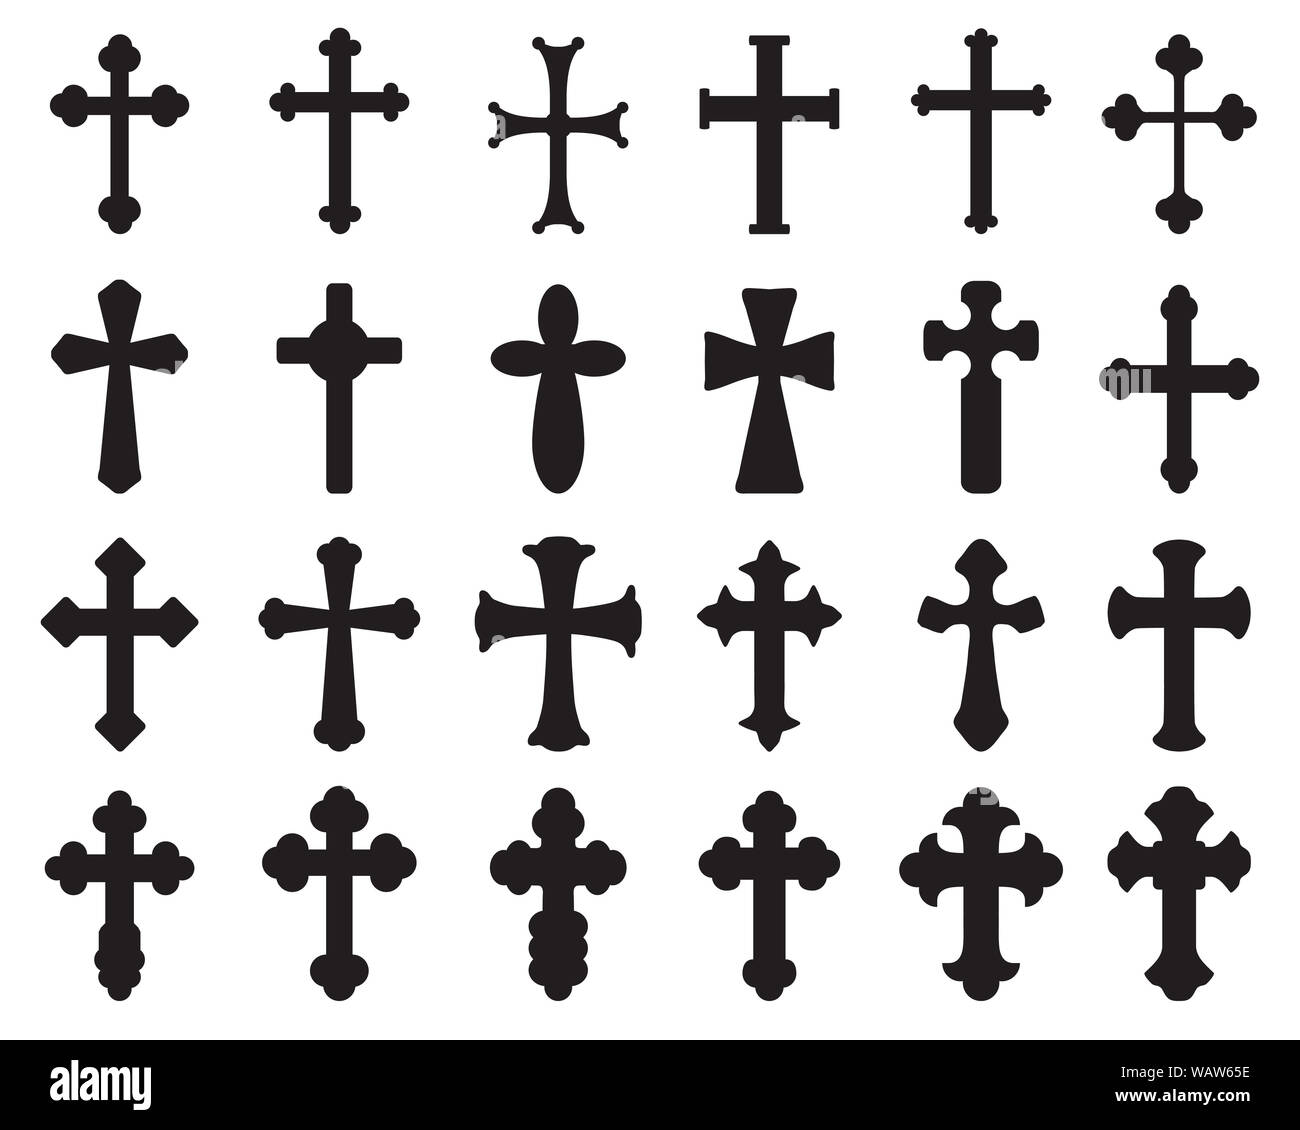 Big set of black silhouettes of different crosses, various religious symbols Stock Photo